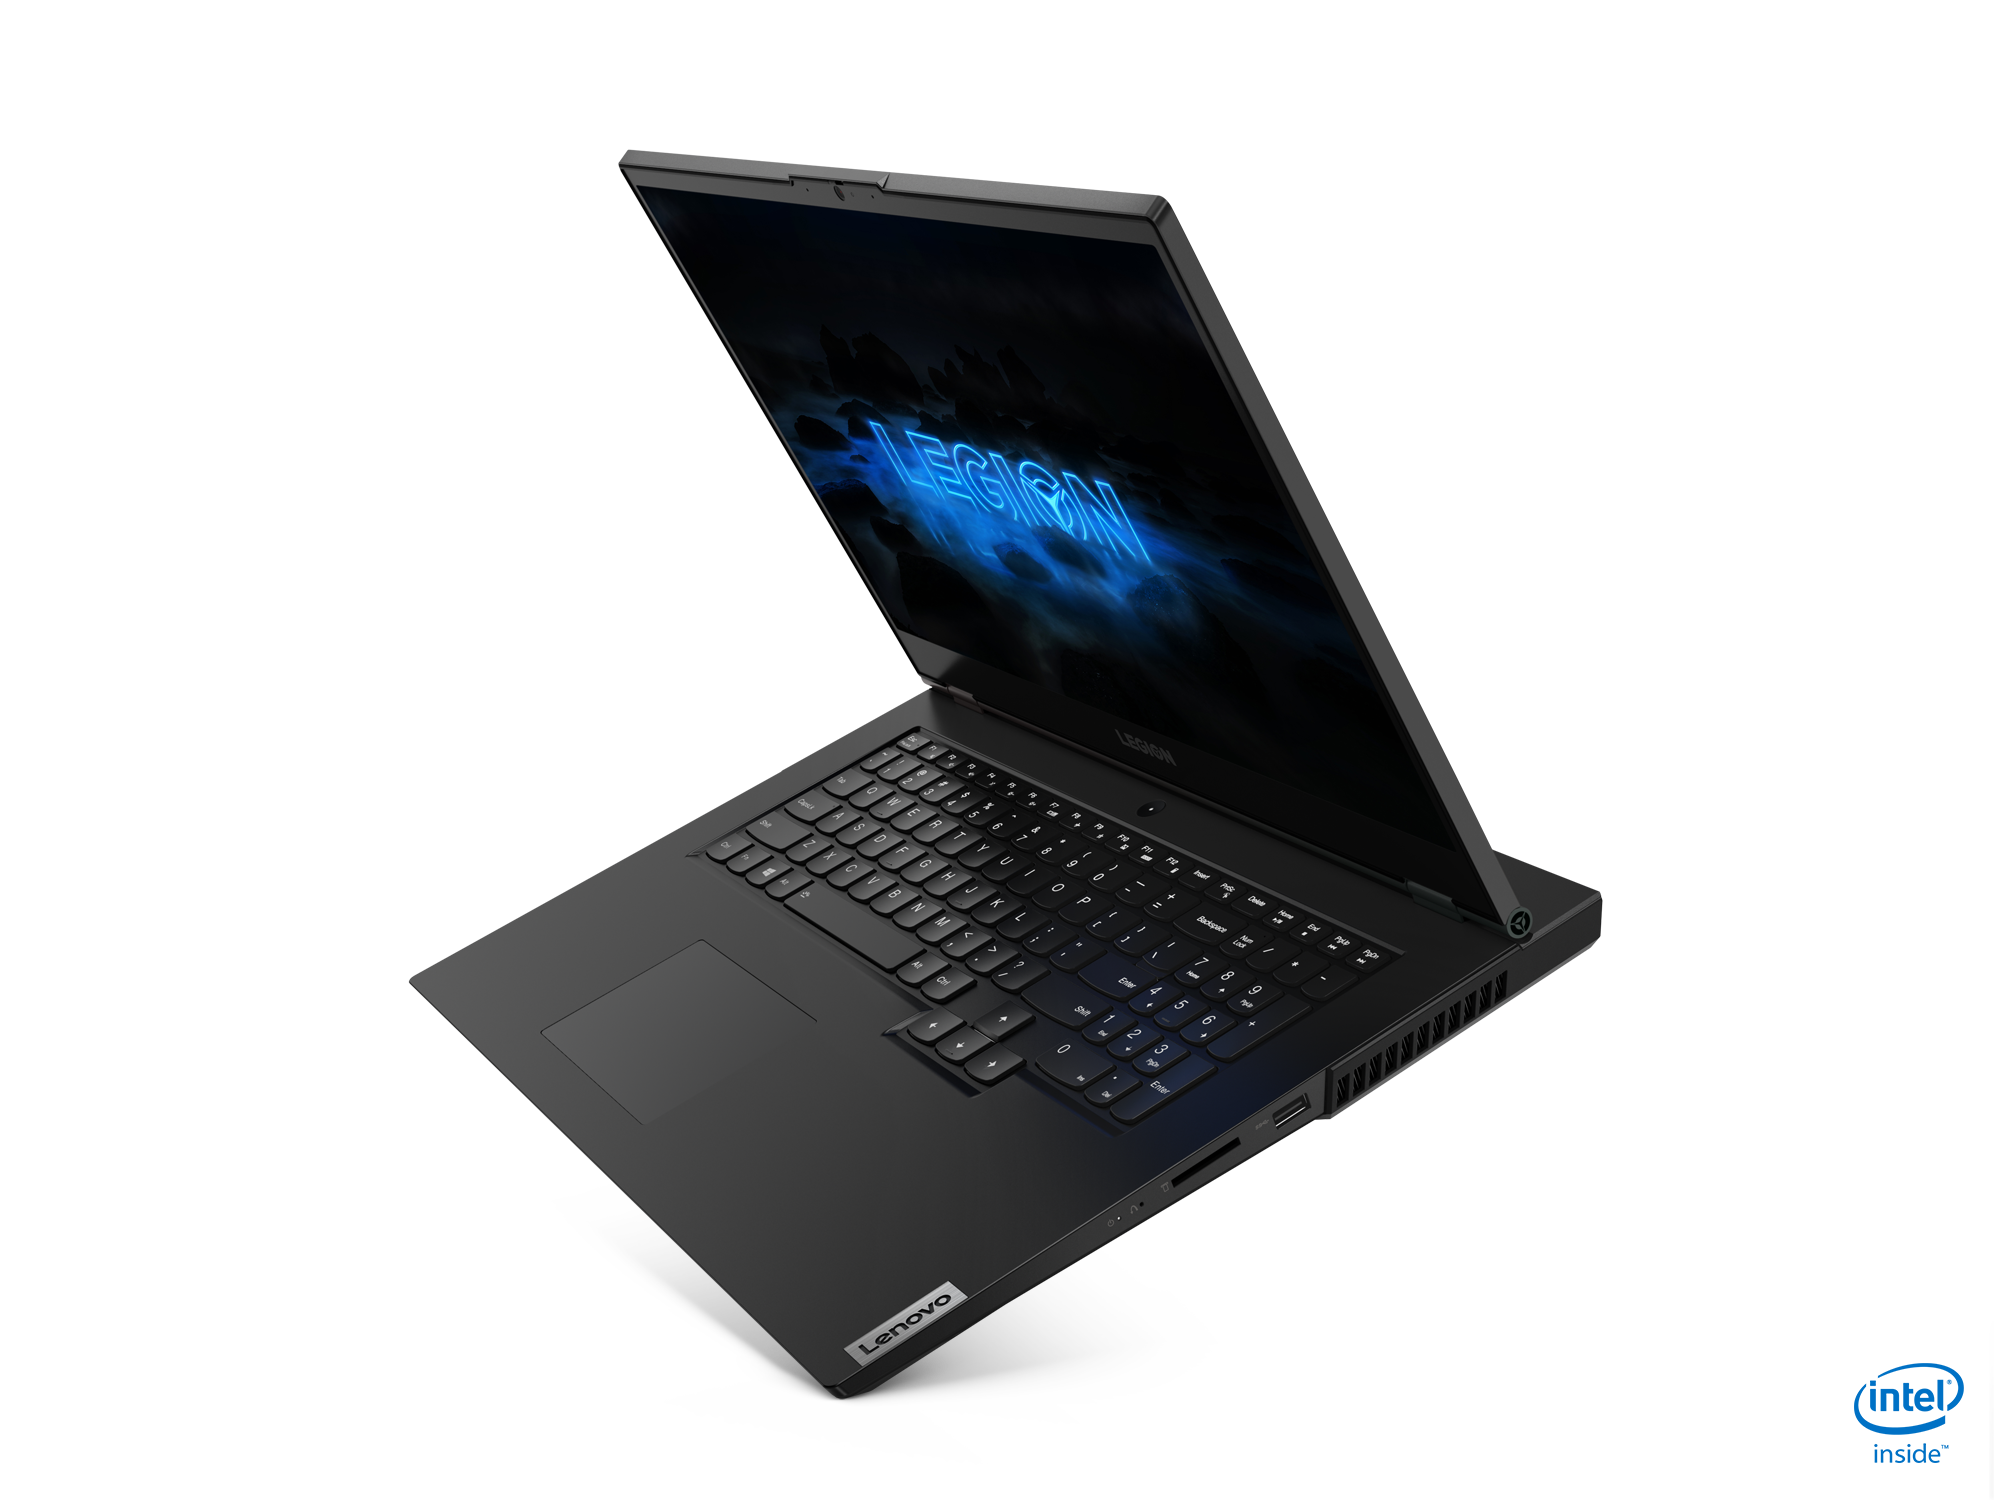 Lenovo Legion 5 Laptop, 17" FHD, Intel Core i7-10750H, 16GB RAM, 1TB HDD + 256GB SSD, NVIDIA GeForce GTX 1660Ti, Phantom Black, Windows 10, 81Y80057US - image 4 of 4